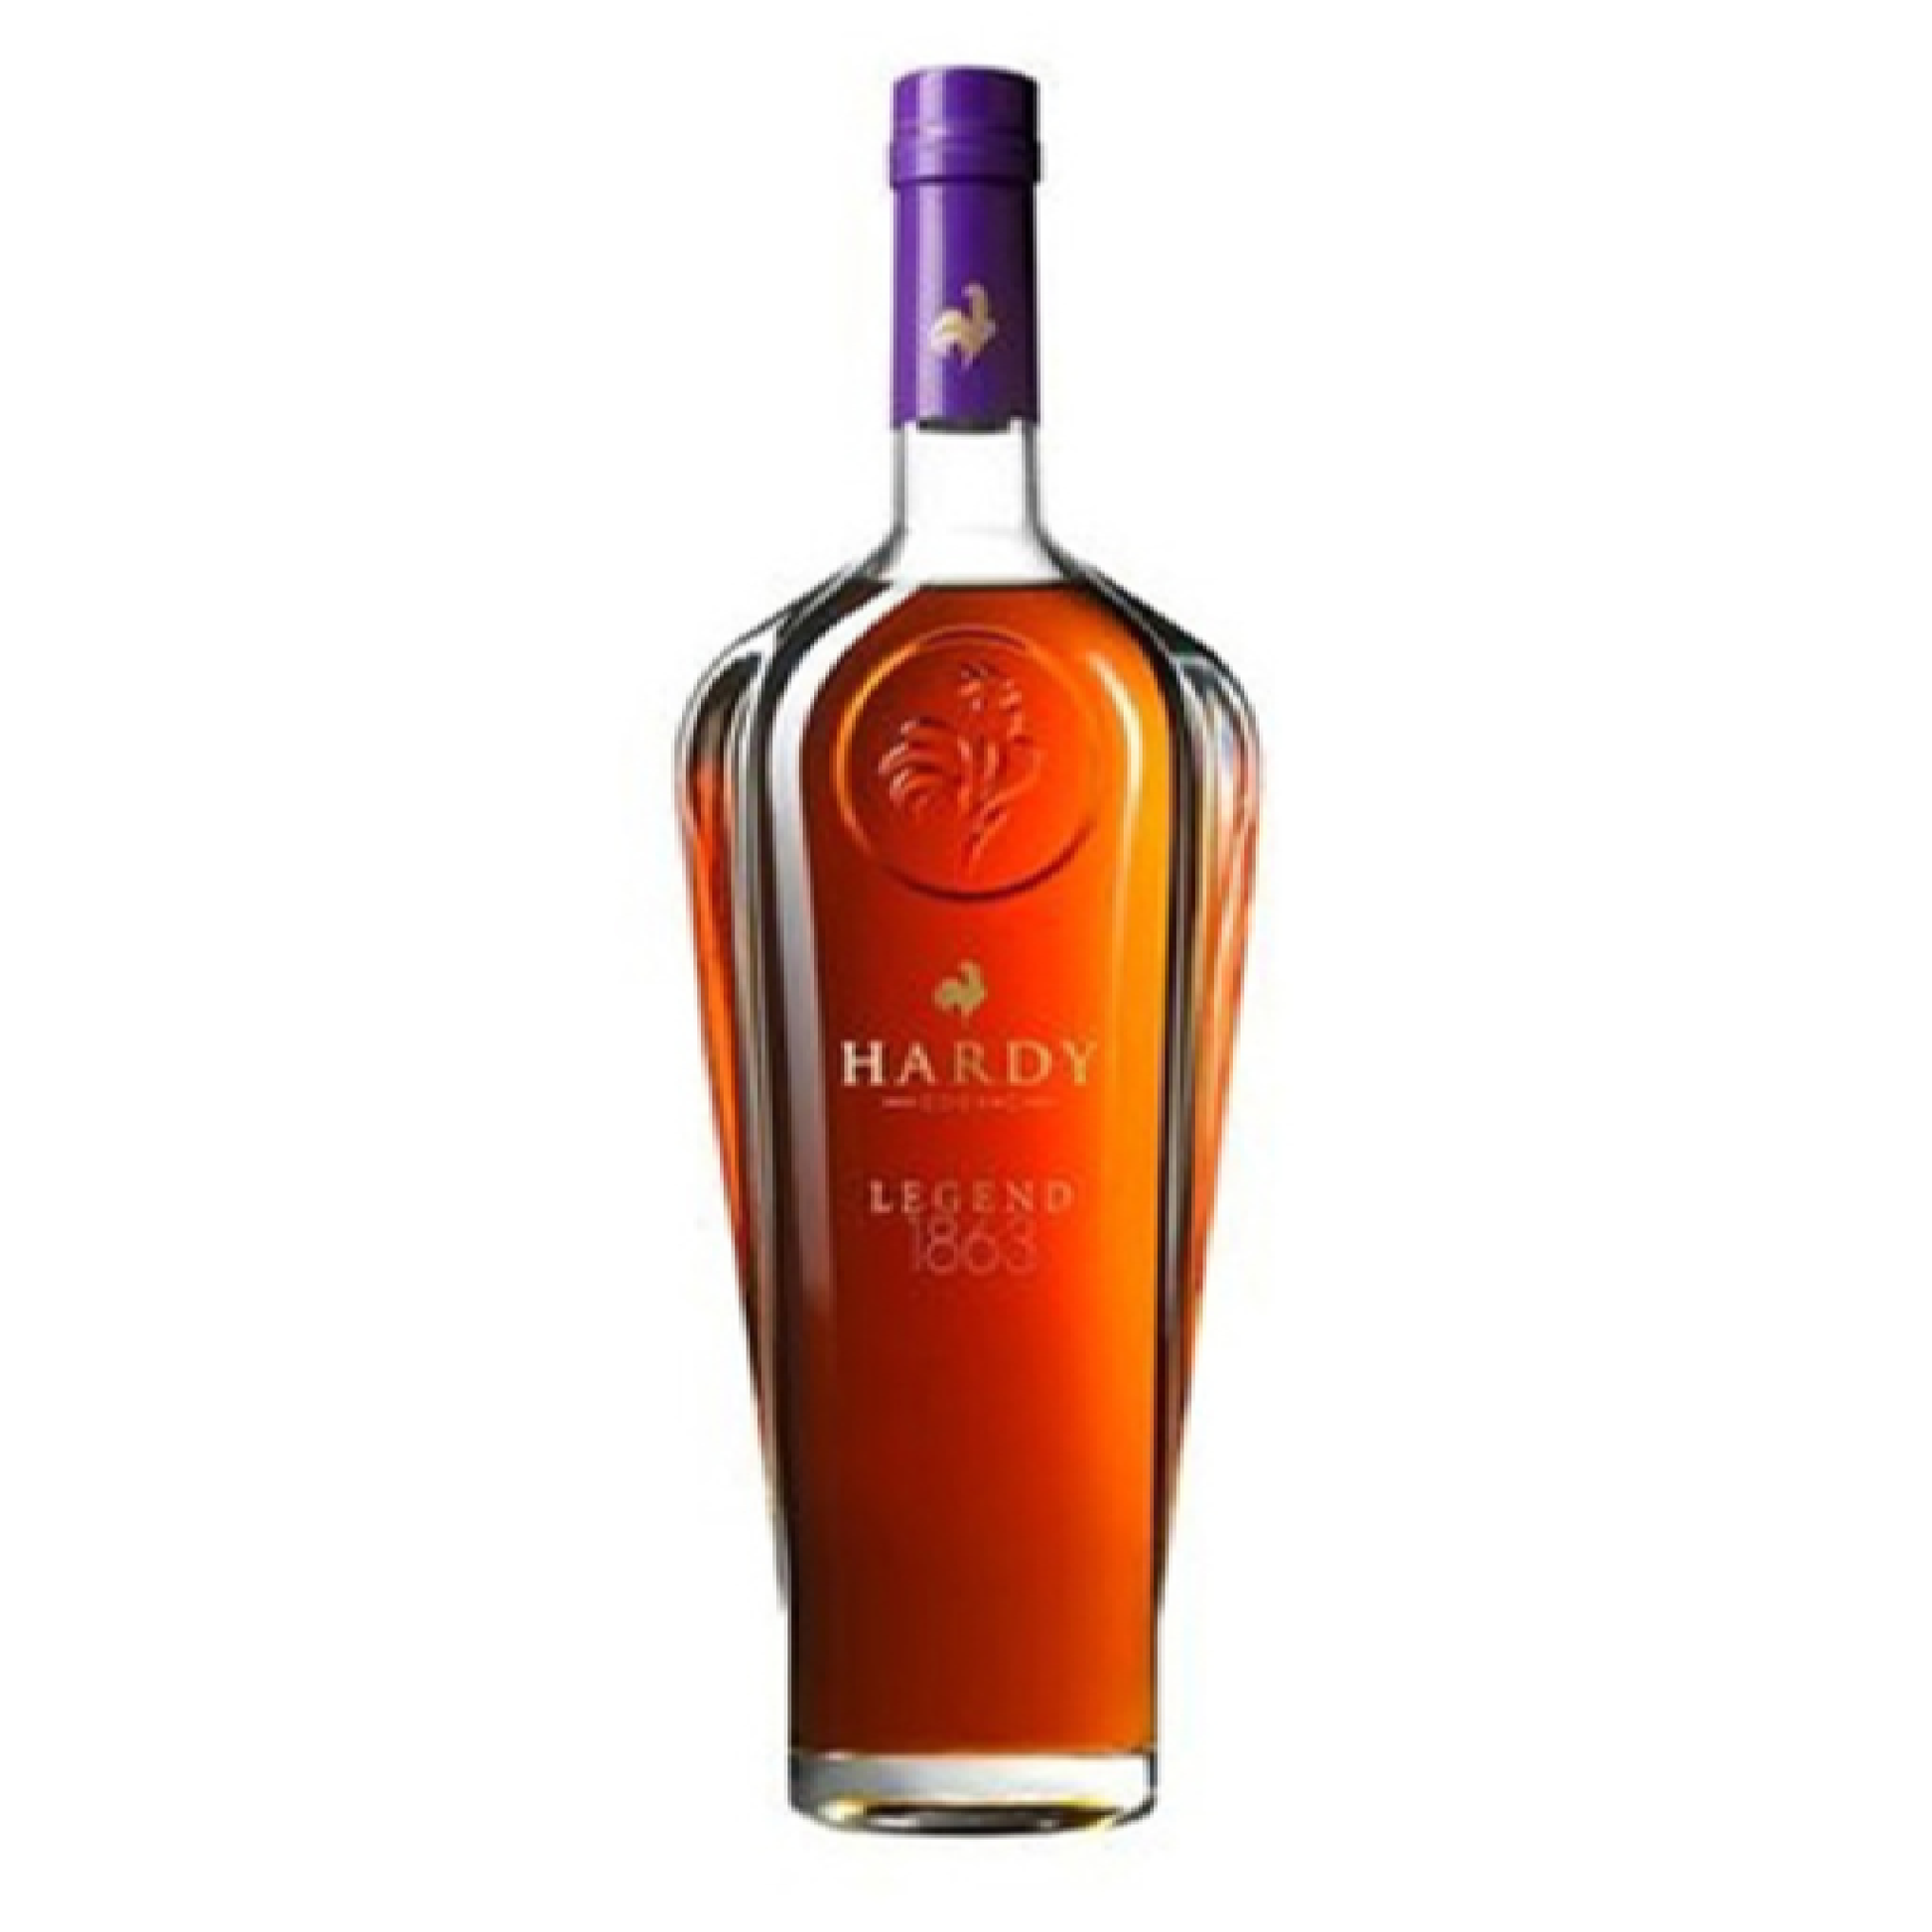 Hardy Legend 1863 Cognac - Liquor Geeks